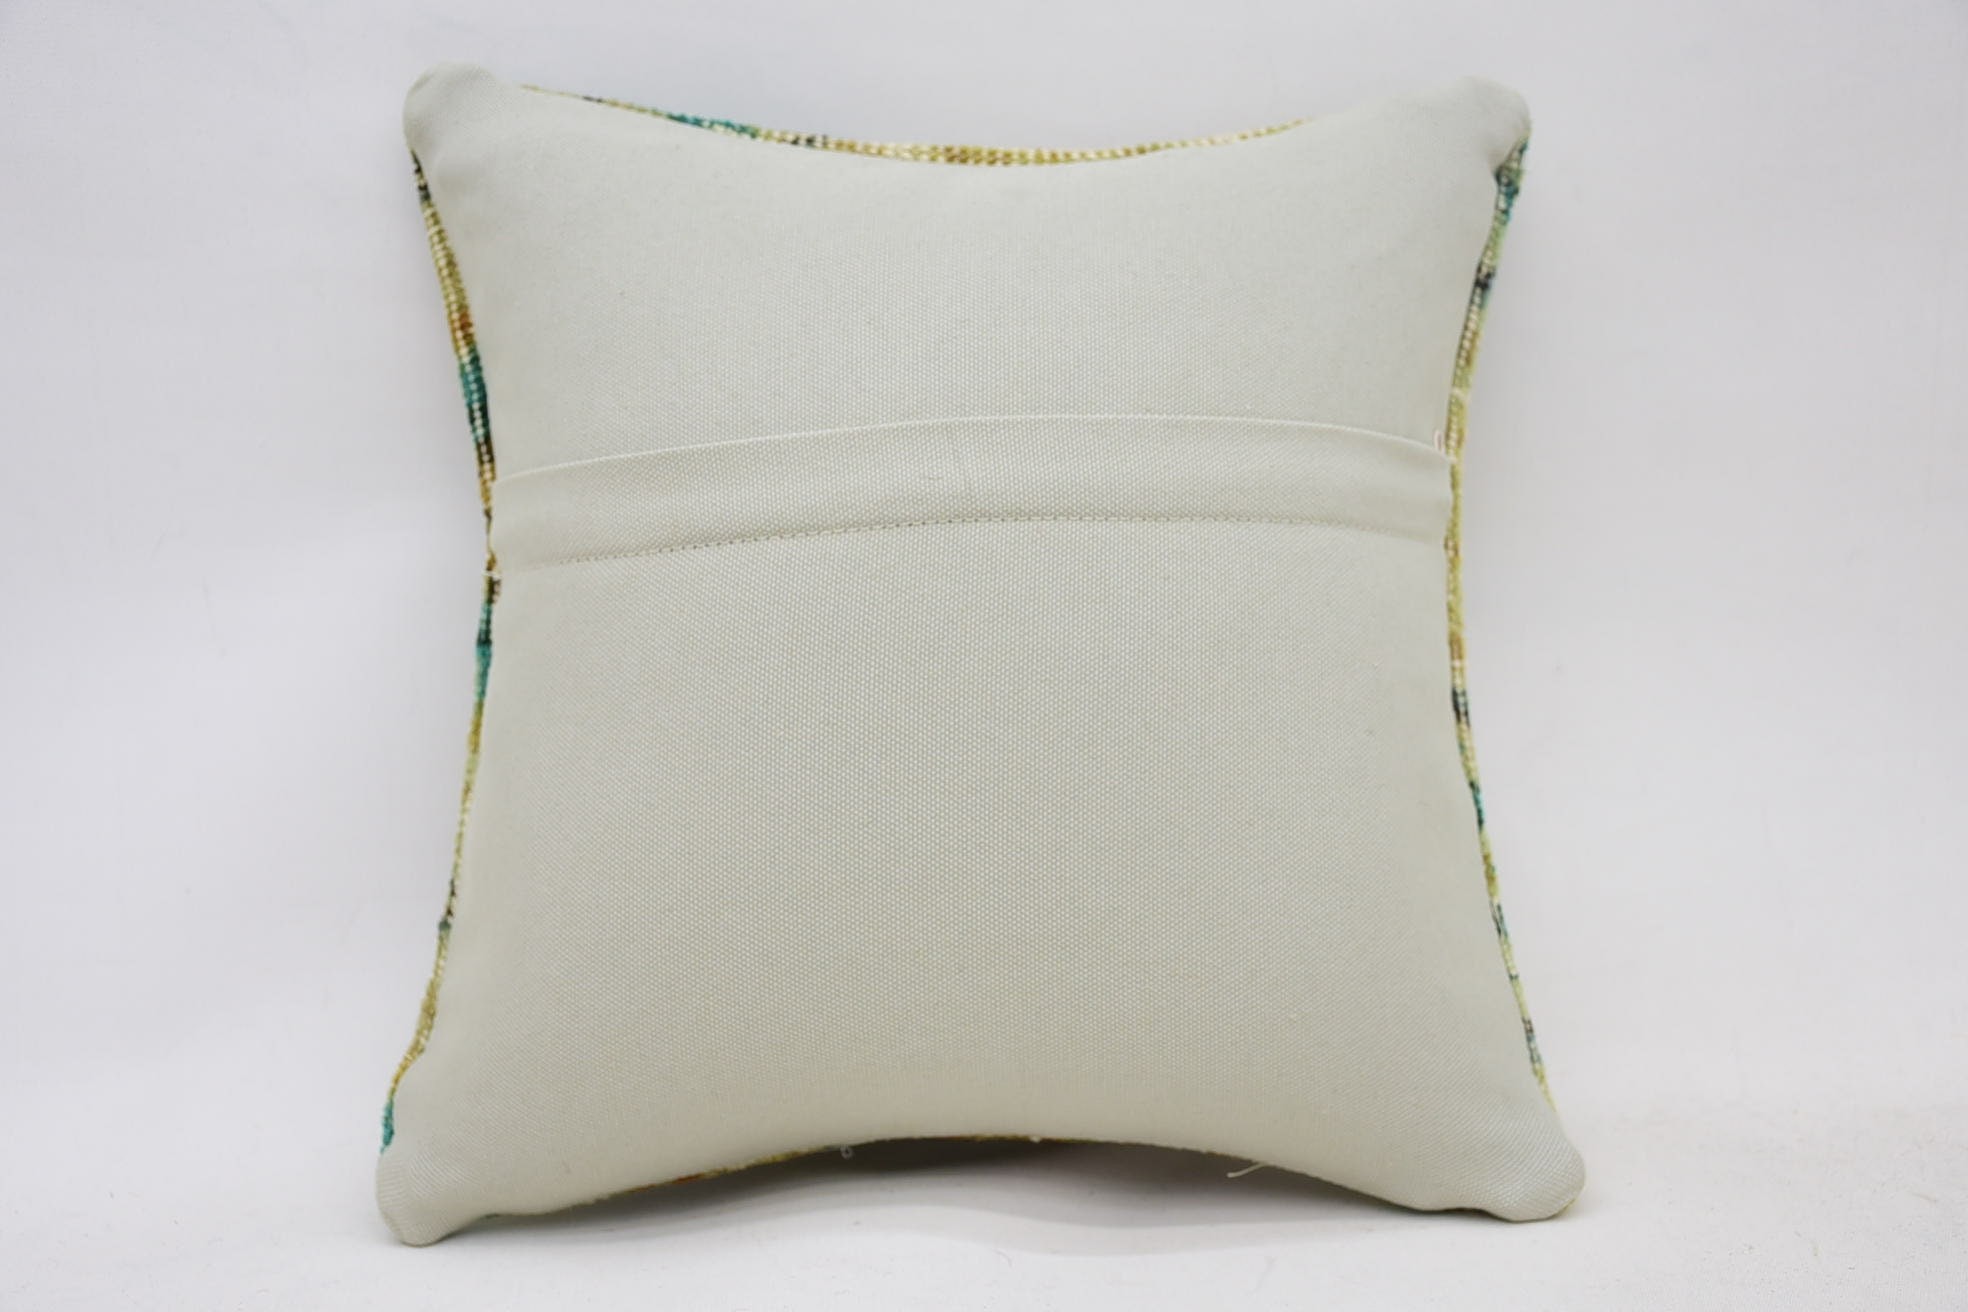 14"x14" Green Pillow, Outdoor Throw Pillow Case, Turkish Rugs Pillow, Kilim Pillow Cover, Home Decor Pillow, Ethnical Kilim Rug Pillow